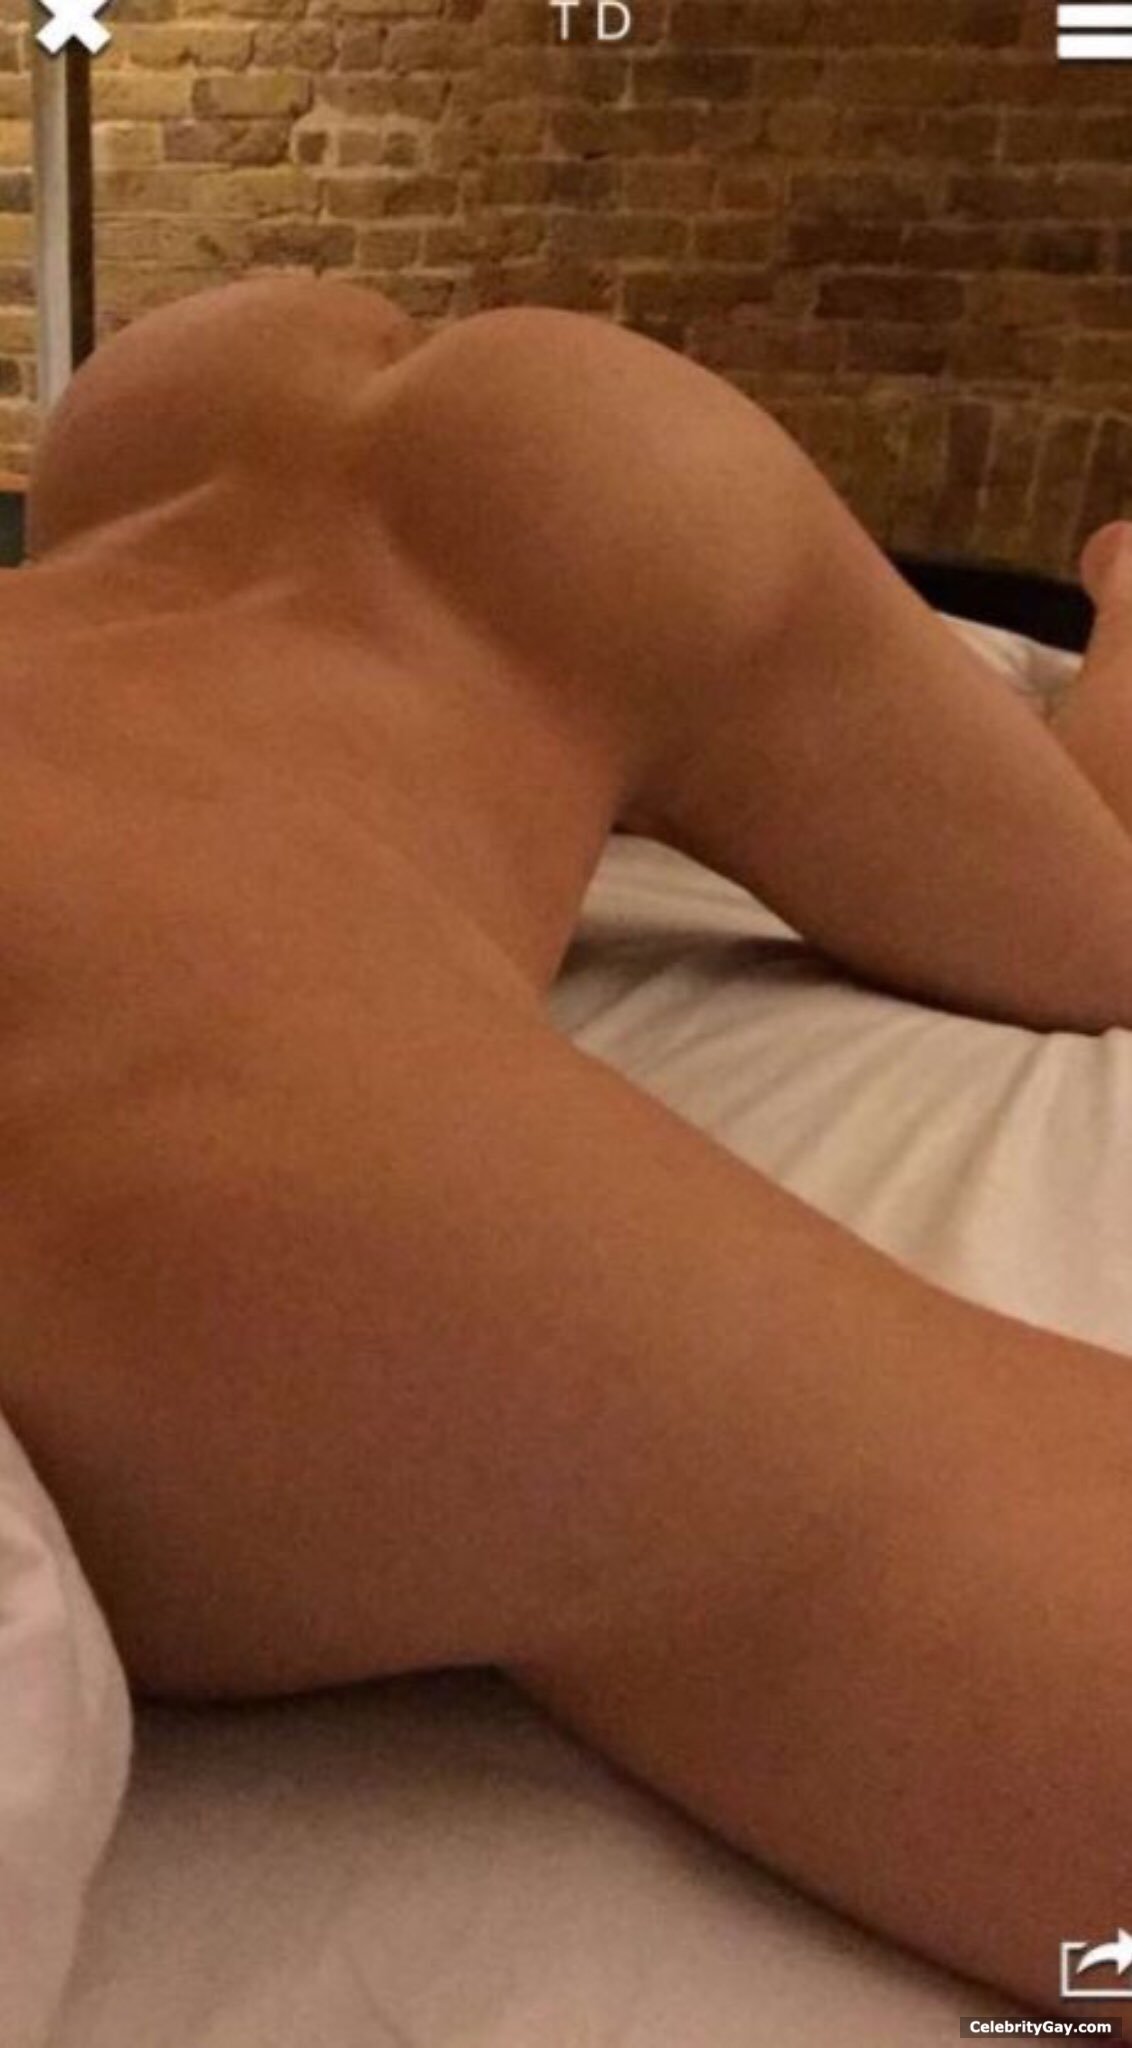 tom daley leaked naked selfies hd sex photo